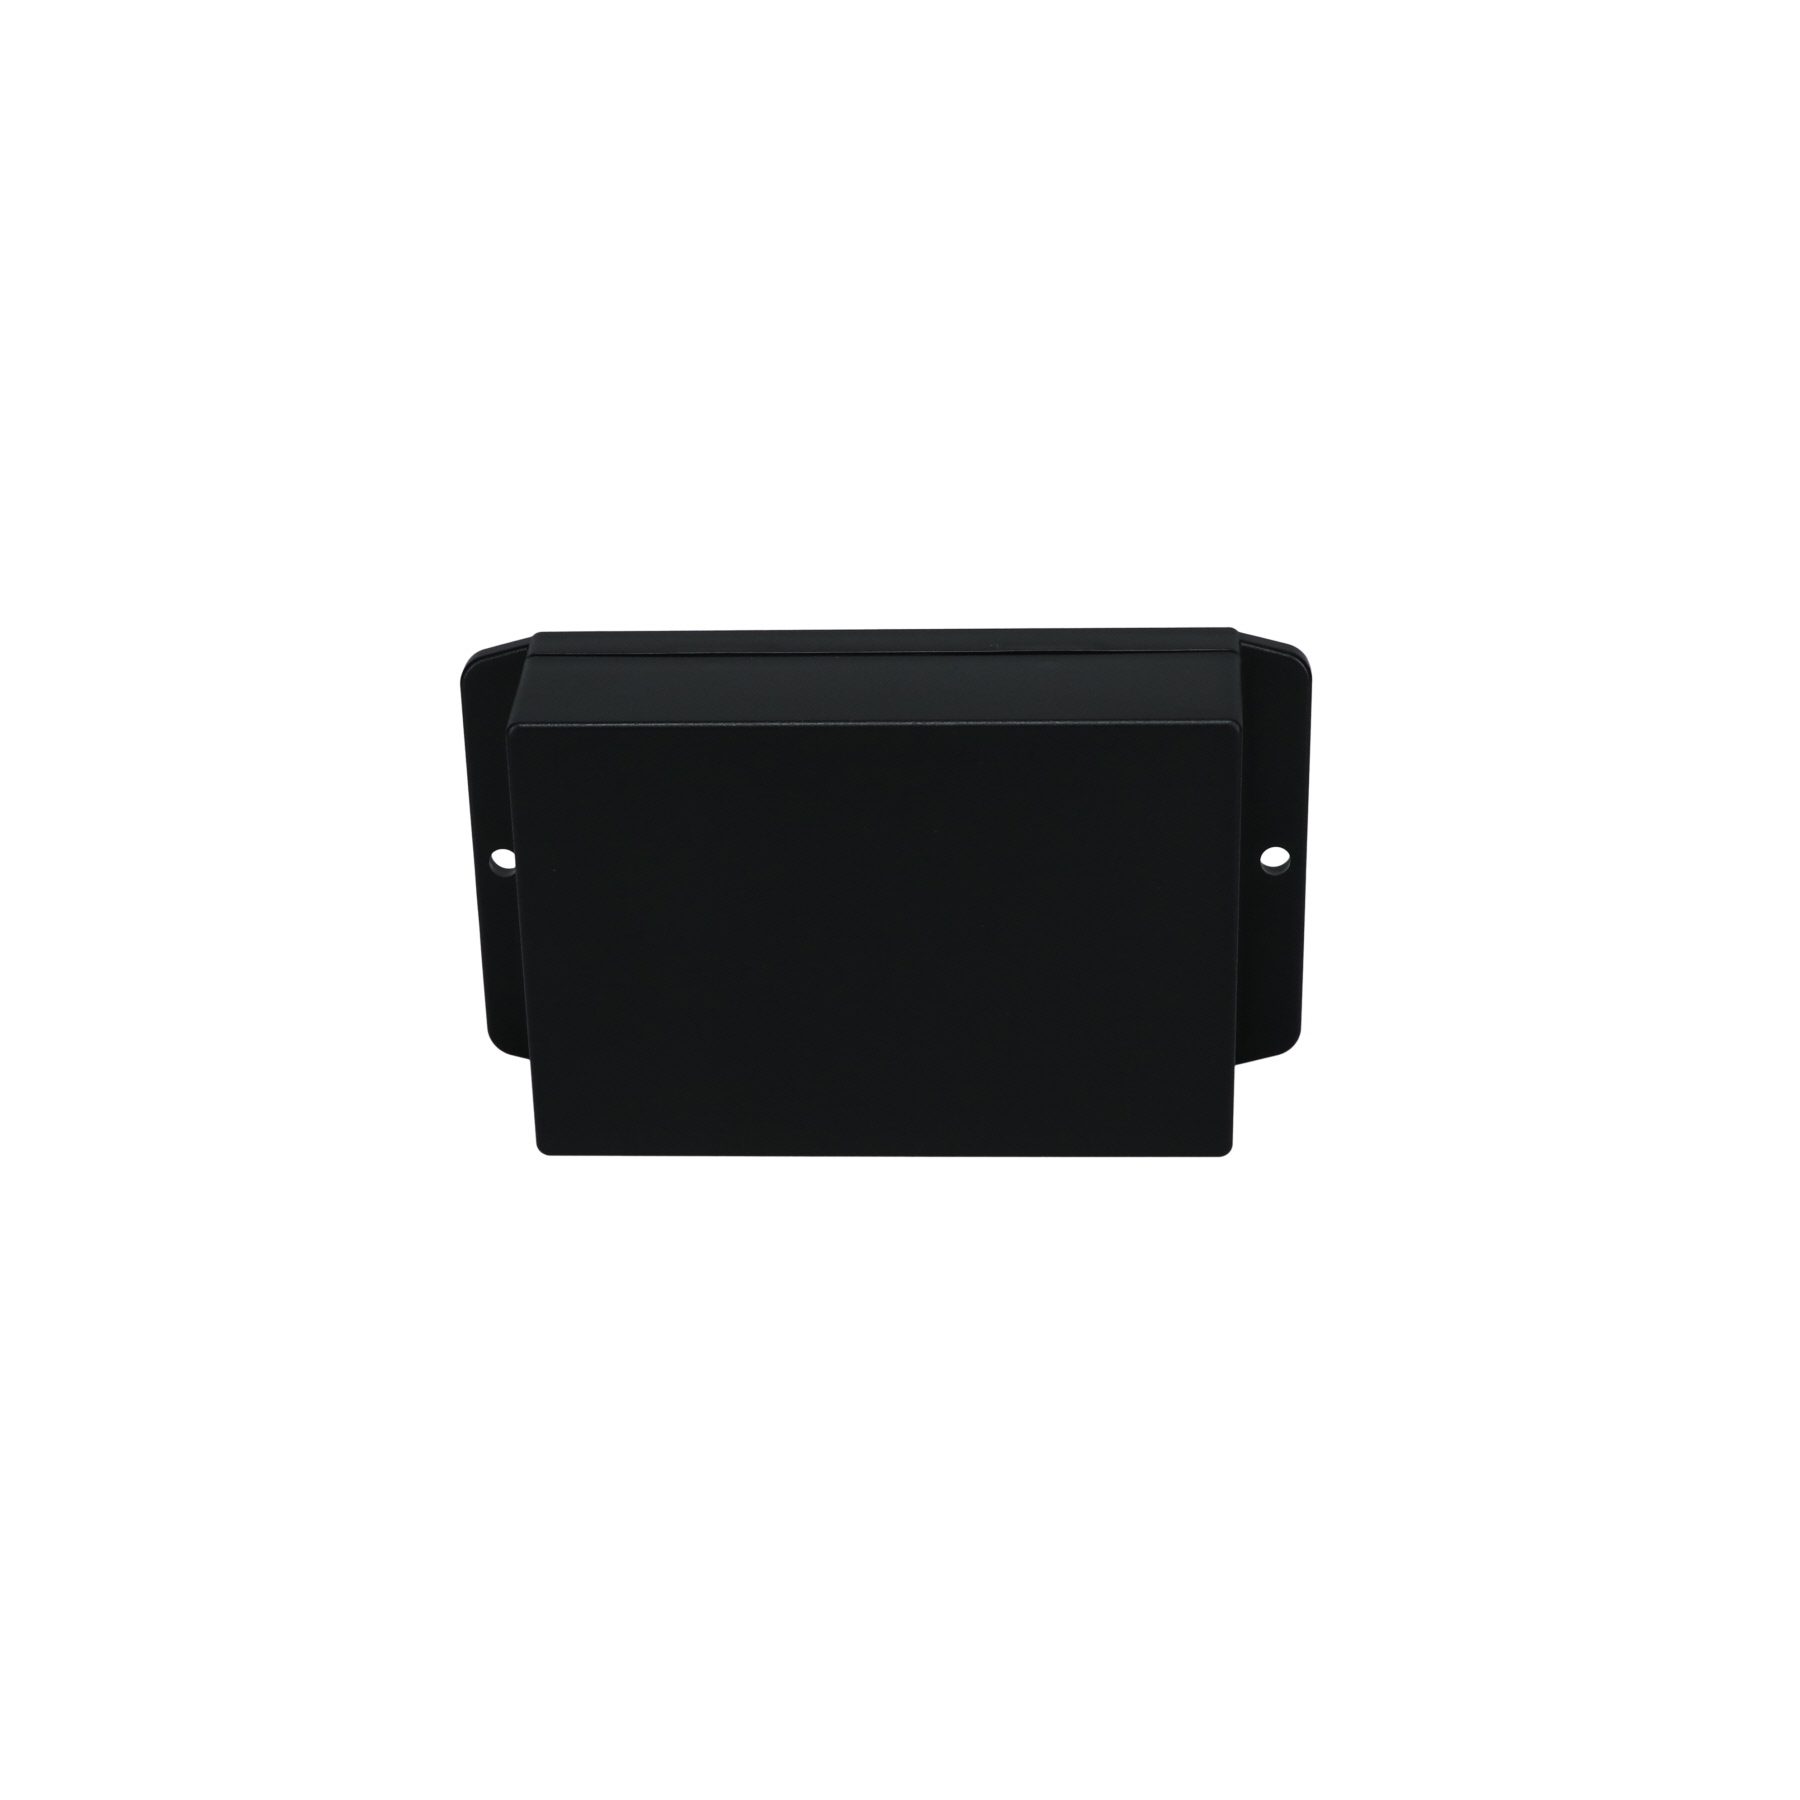 Snap Utility Box Black CU-18428-B